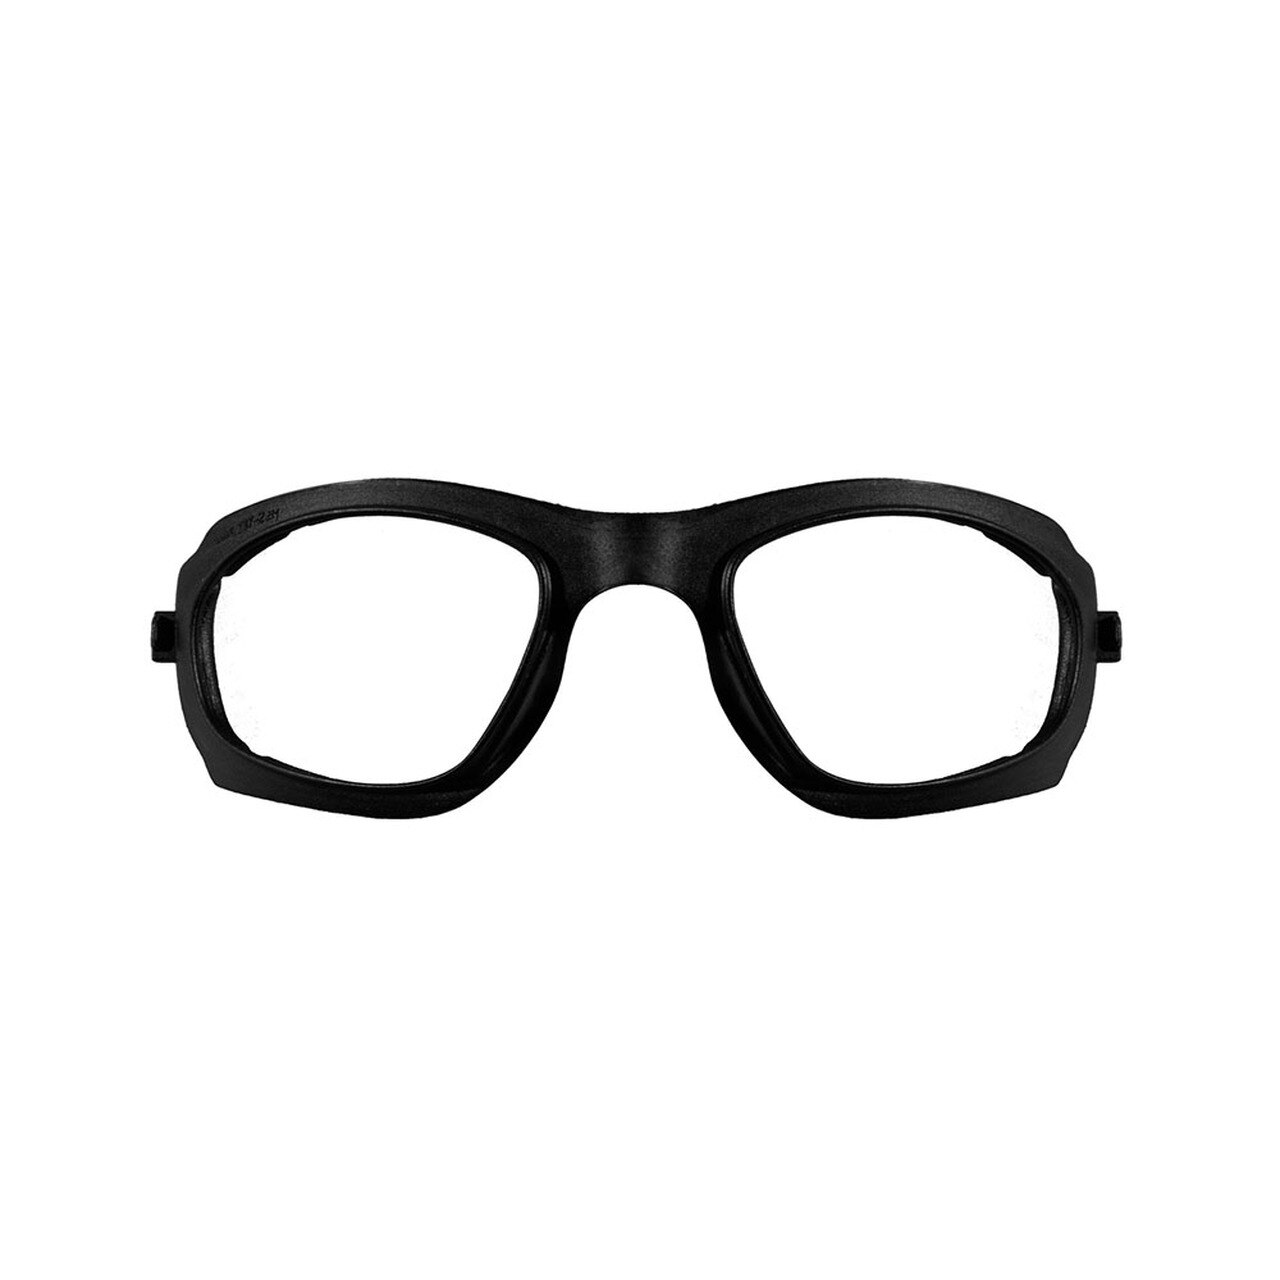 Wiley X XL1 Sunglasses Two Lens Matte Black Frame Tactical Distributors Ltd New Zealand